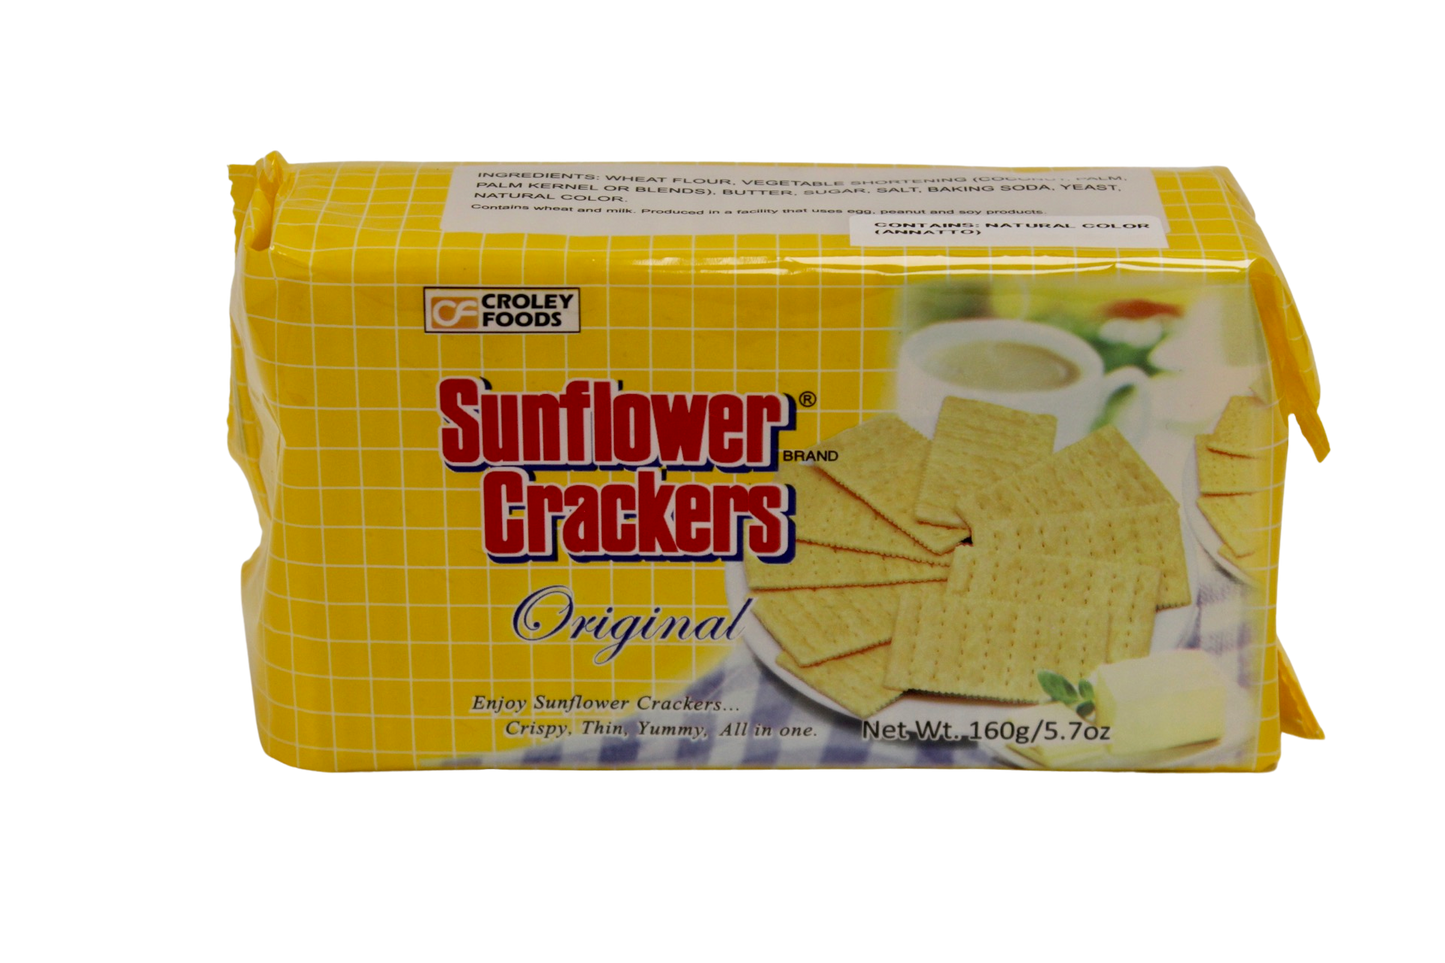 Croley Foods Sunflower Crackers Original 160g